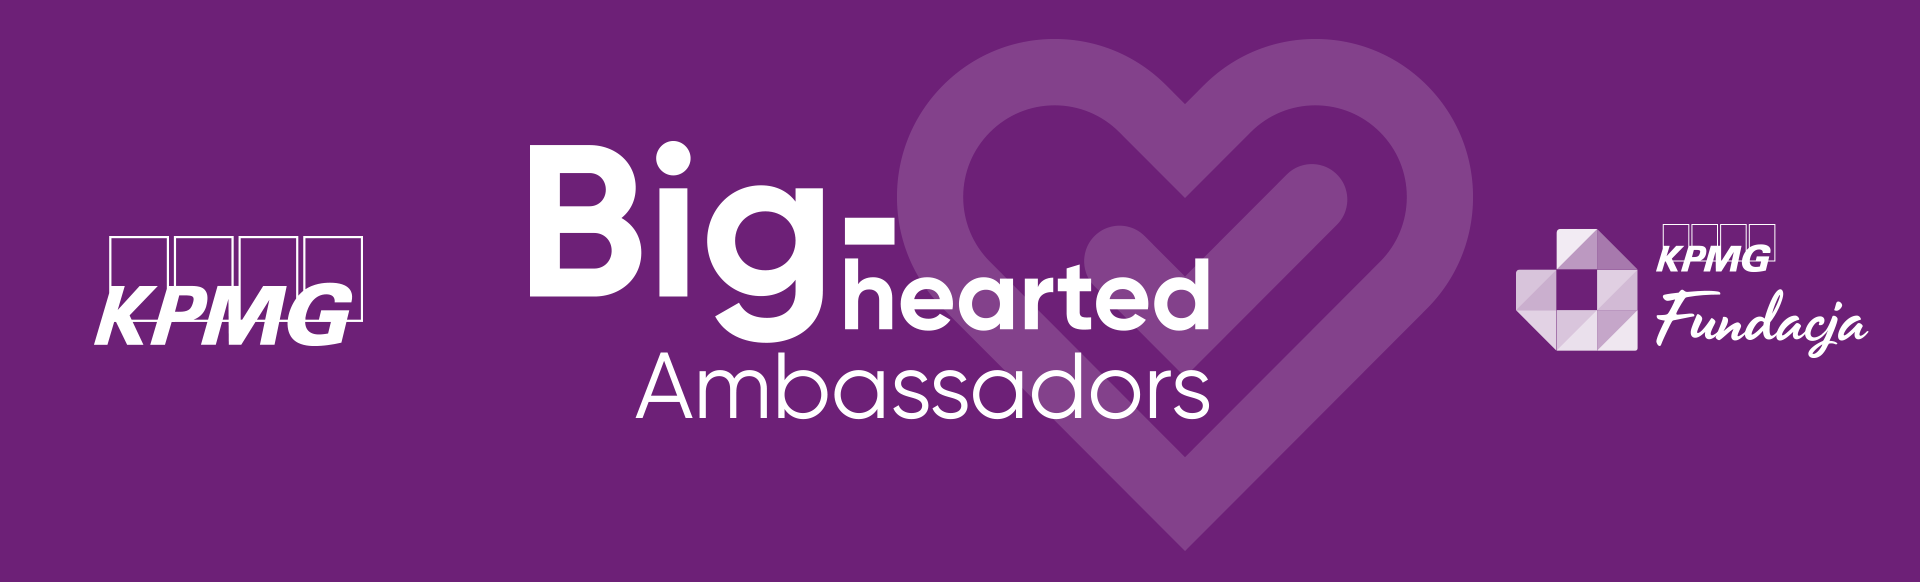 Trwa akcja Big- hearted Ambassadors 2020!